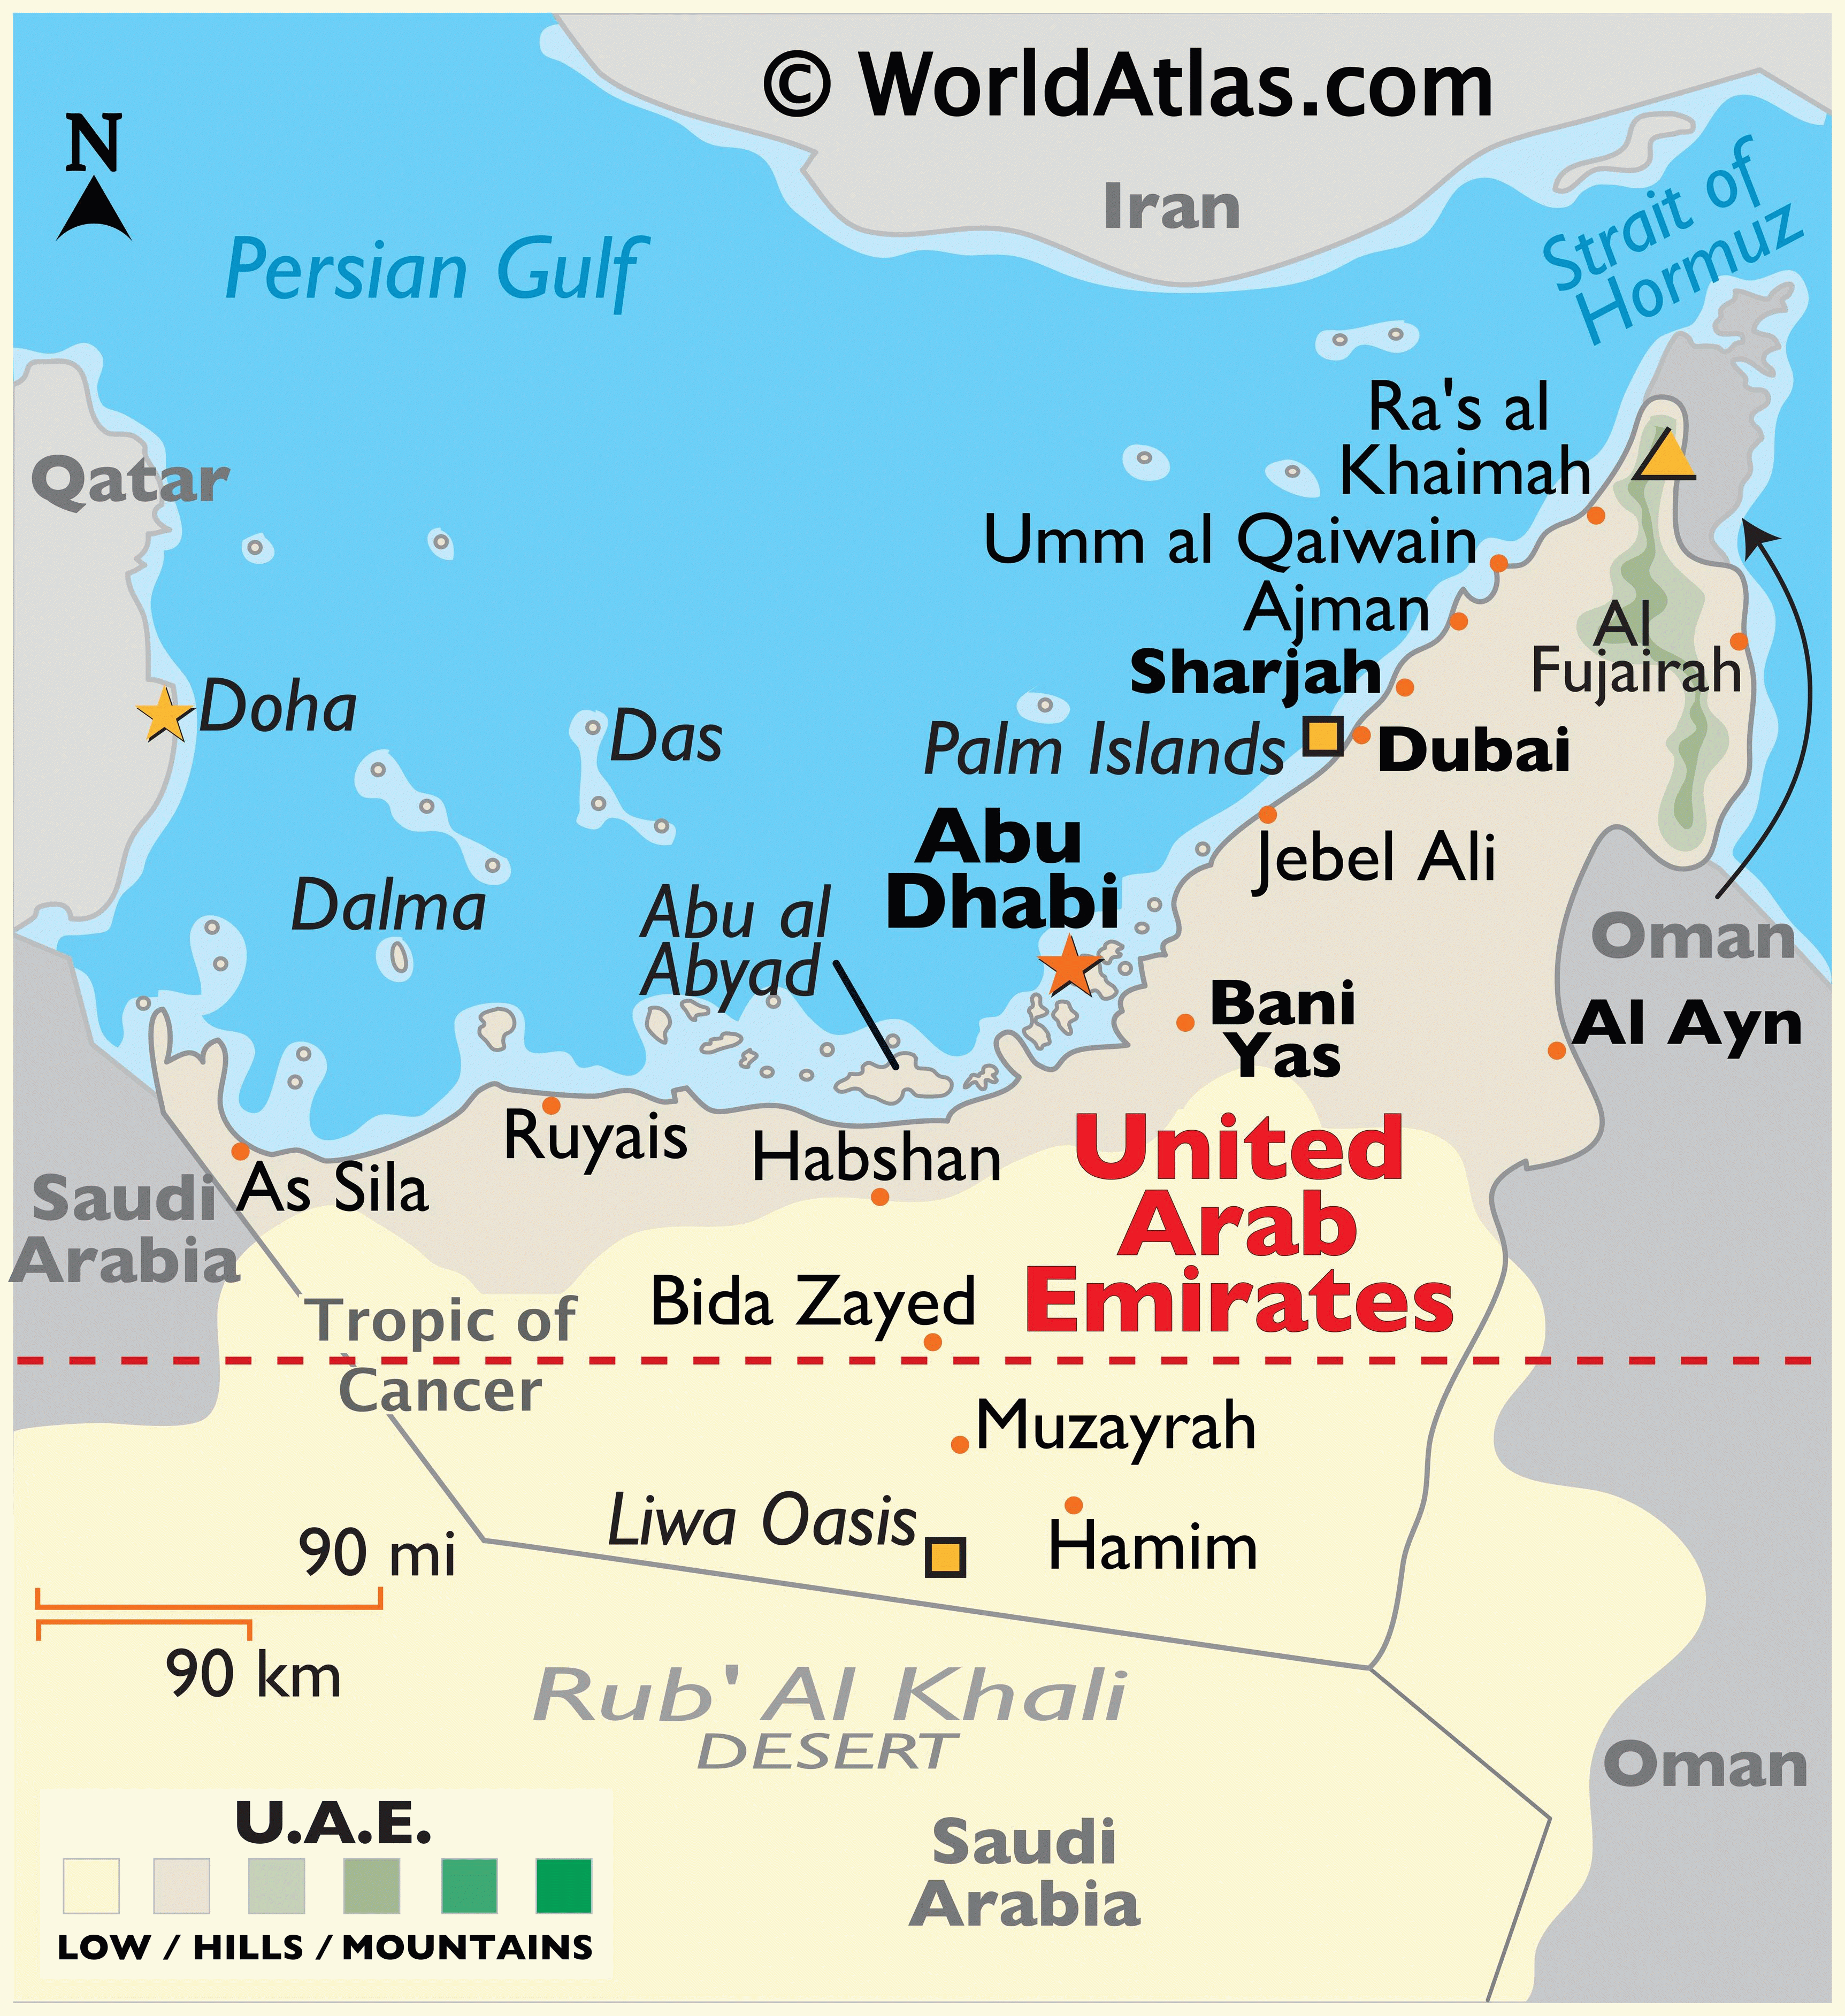 Merantau Di Abu Dhabi – Mamarantau within Jam Berapa Sekarang Di Dubai